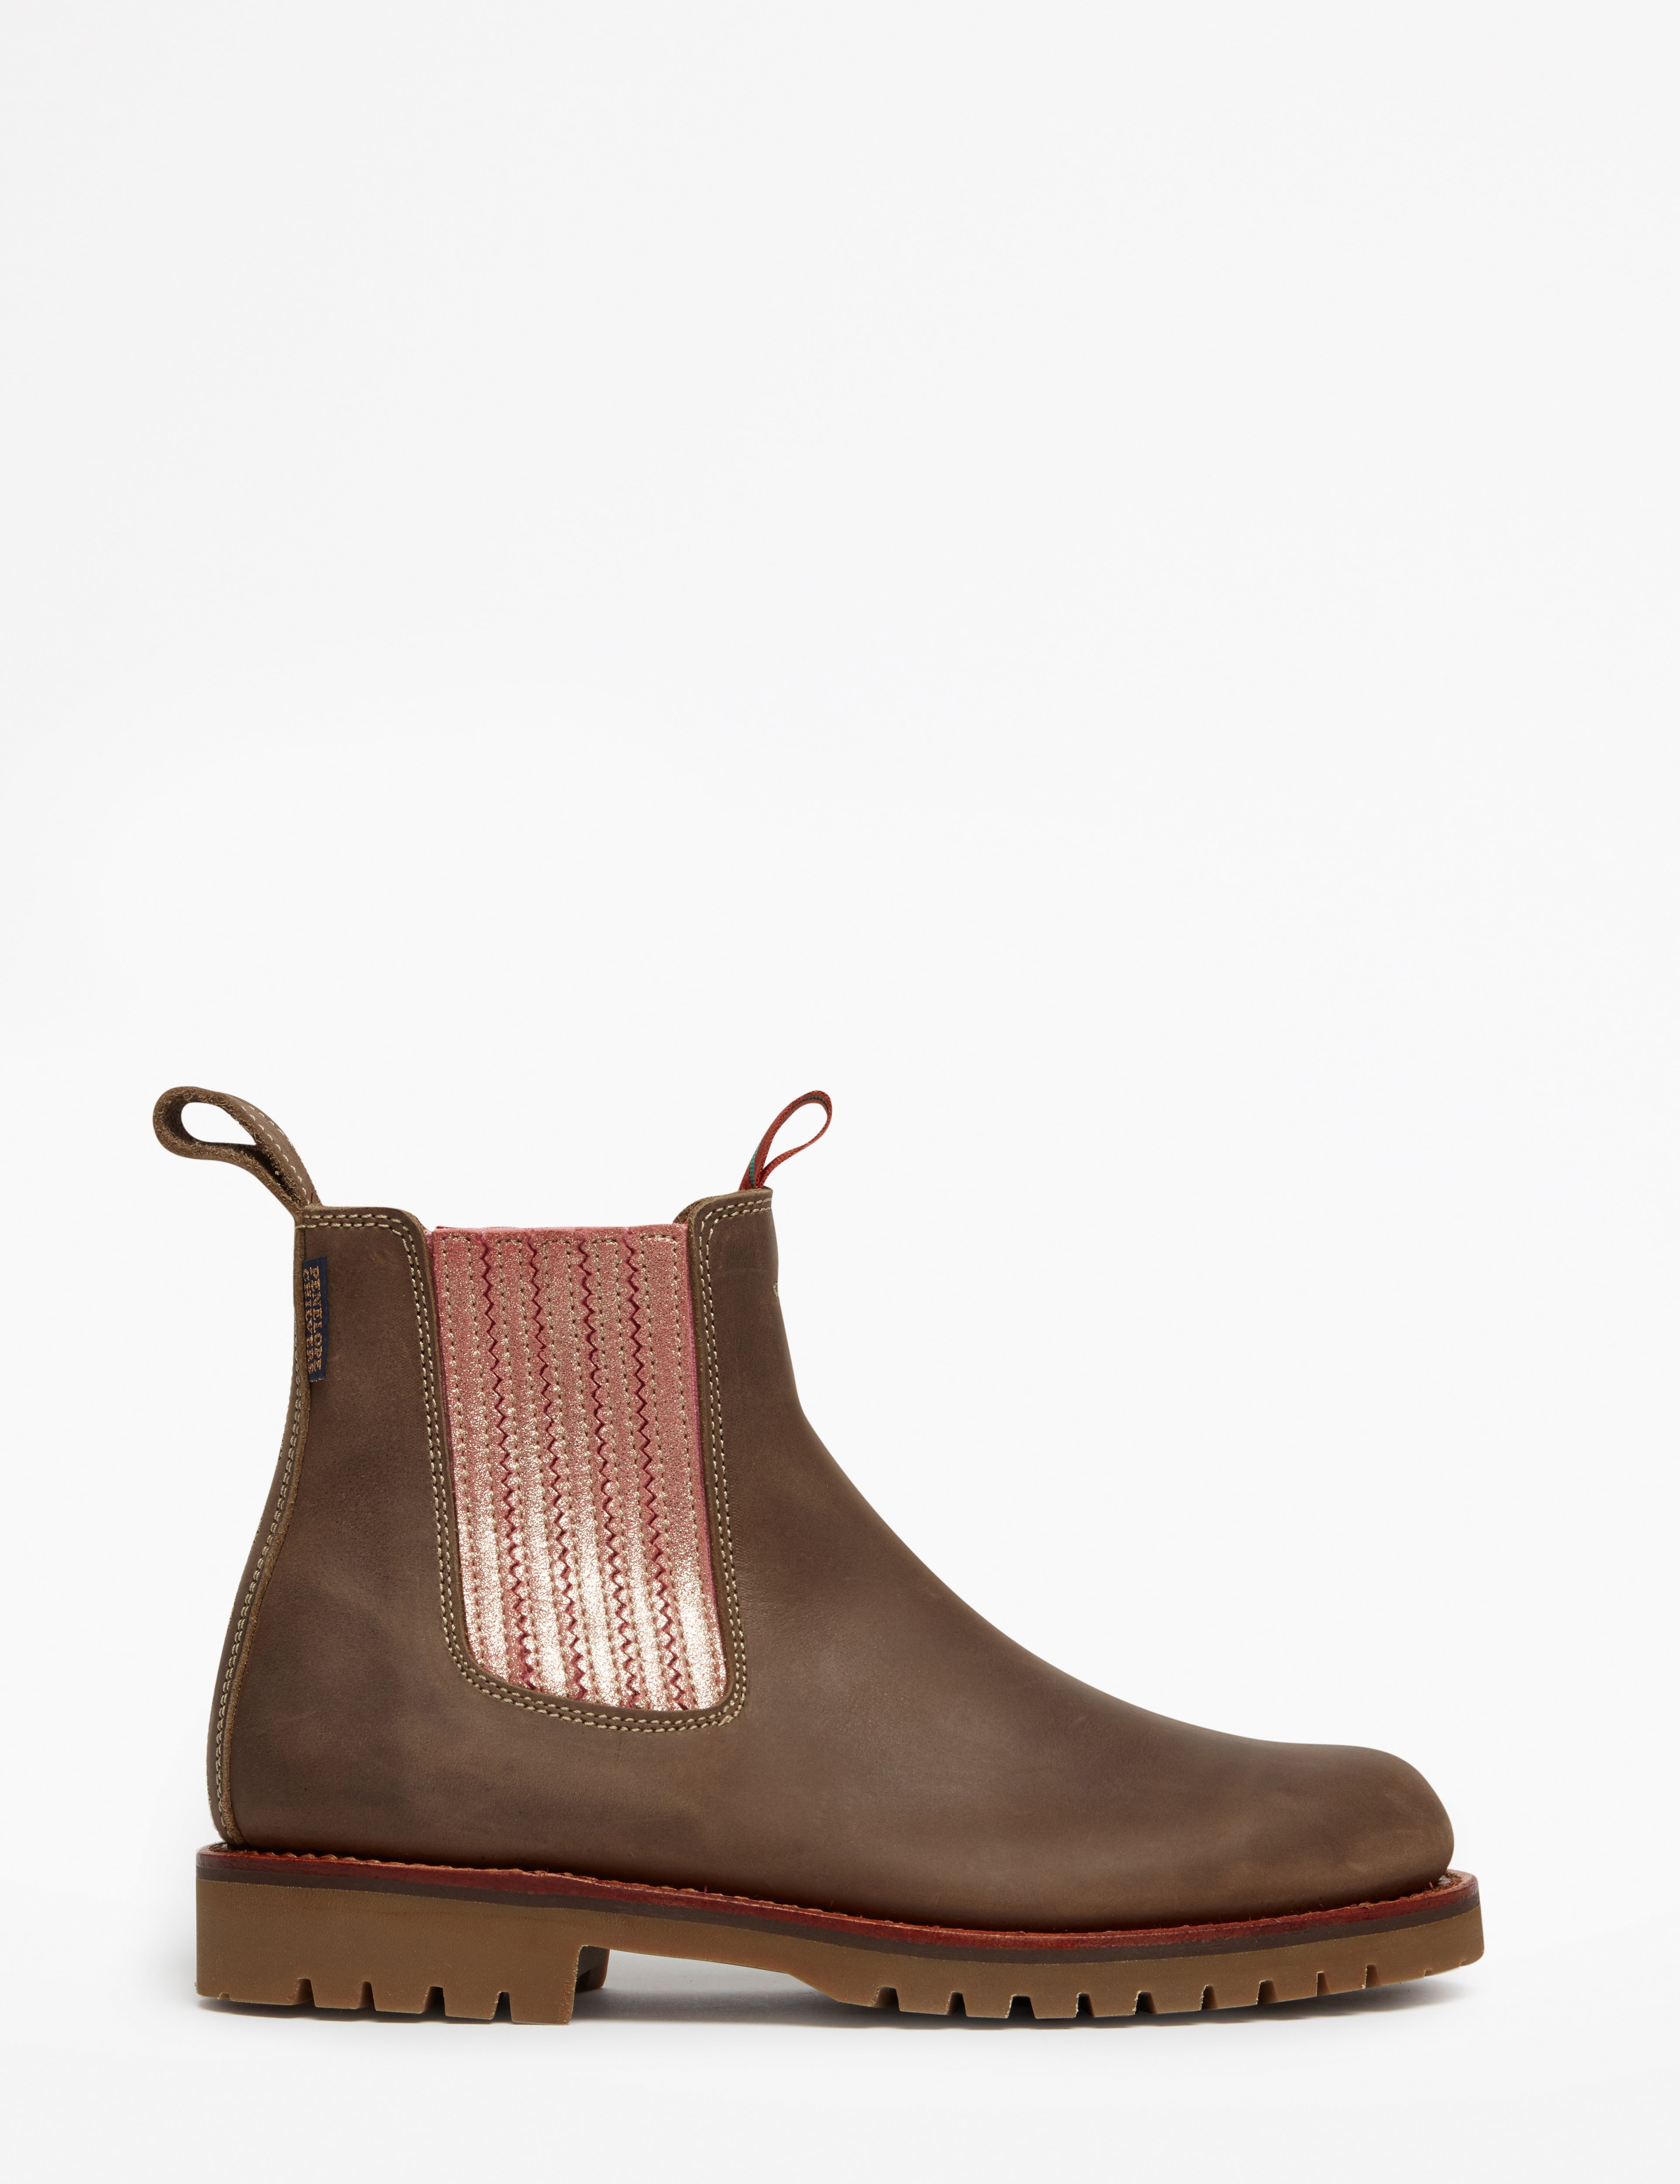 Oscar Leather Boots in Khaki & Tea Rose